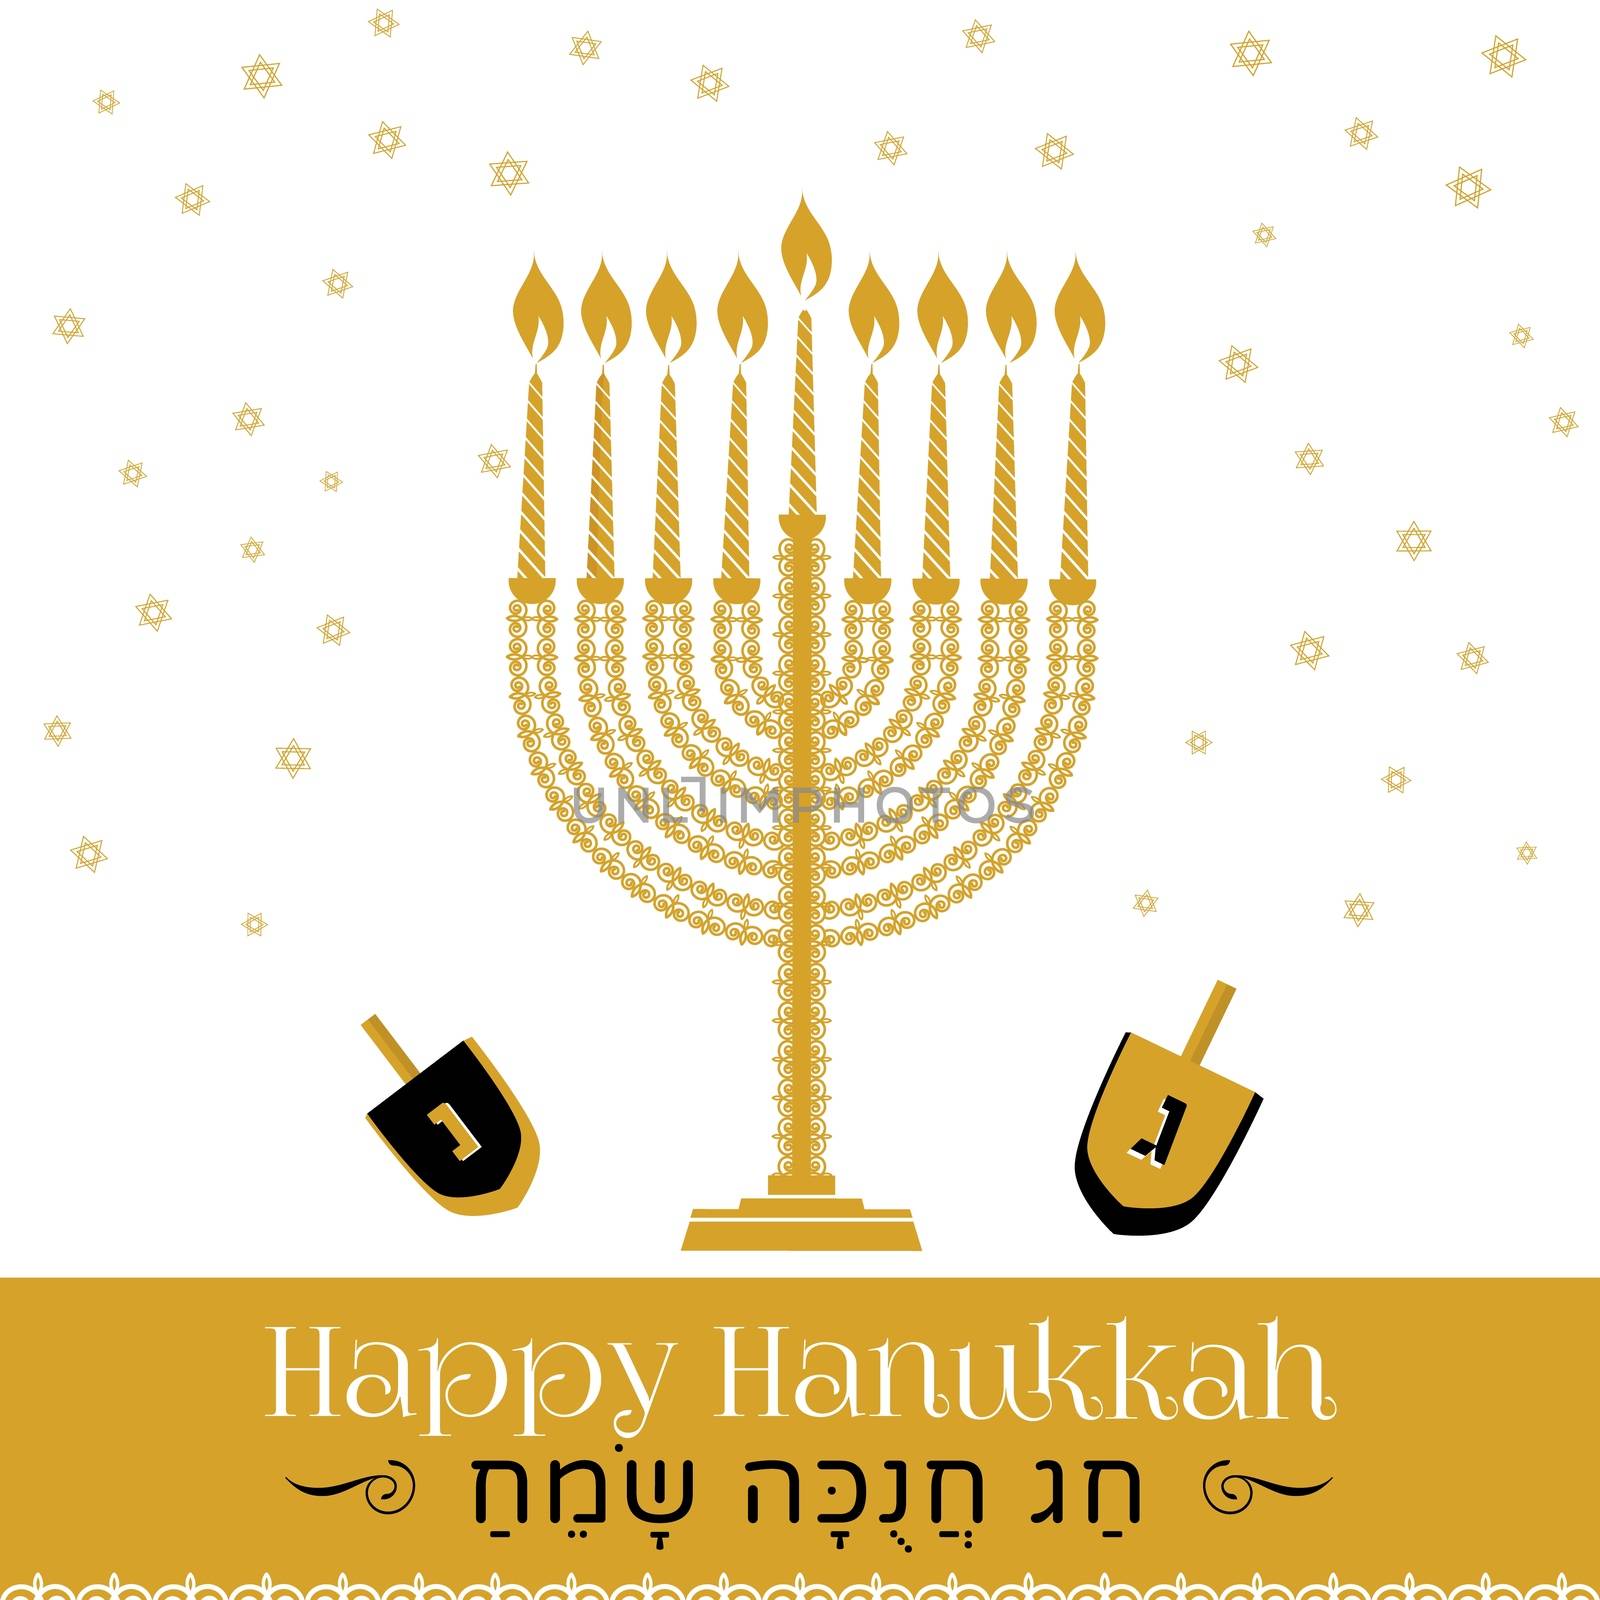 Hanukkah greeting card , Jewish holiday symbols golden hanukkah menorah and candles, dreidel, stars, Happy Hanukkah in Hebrew.